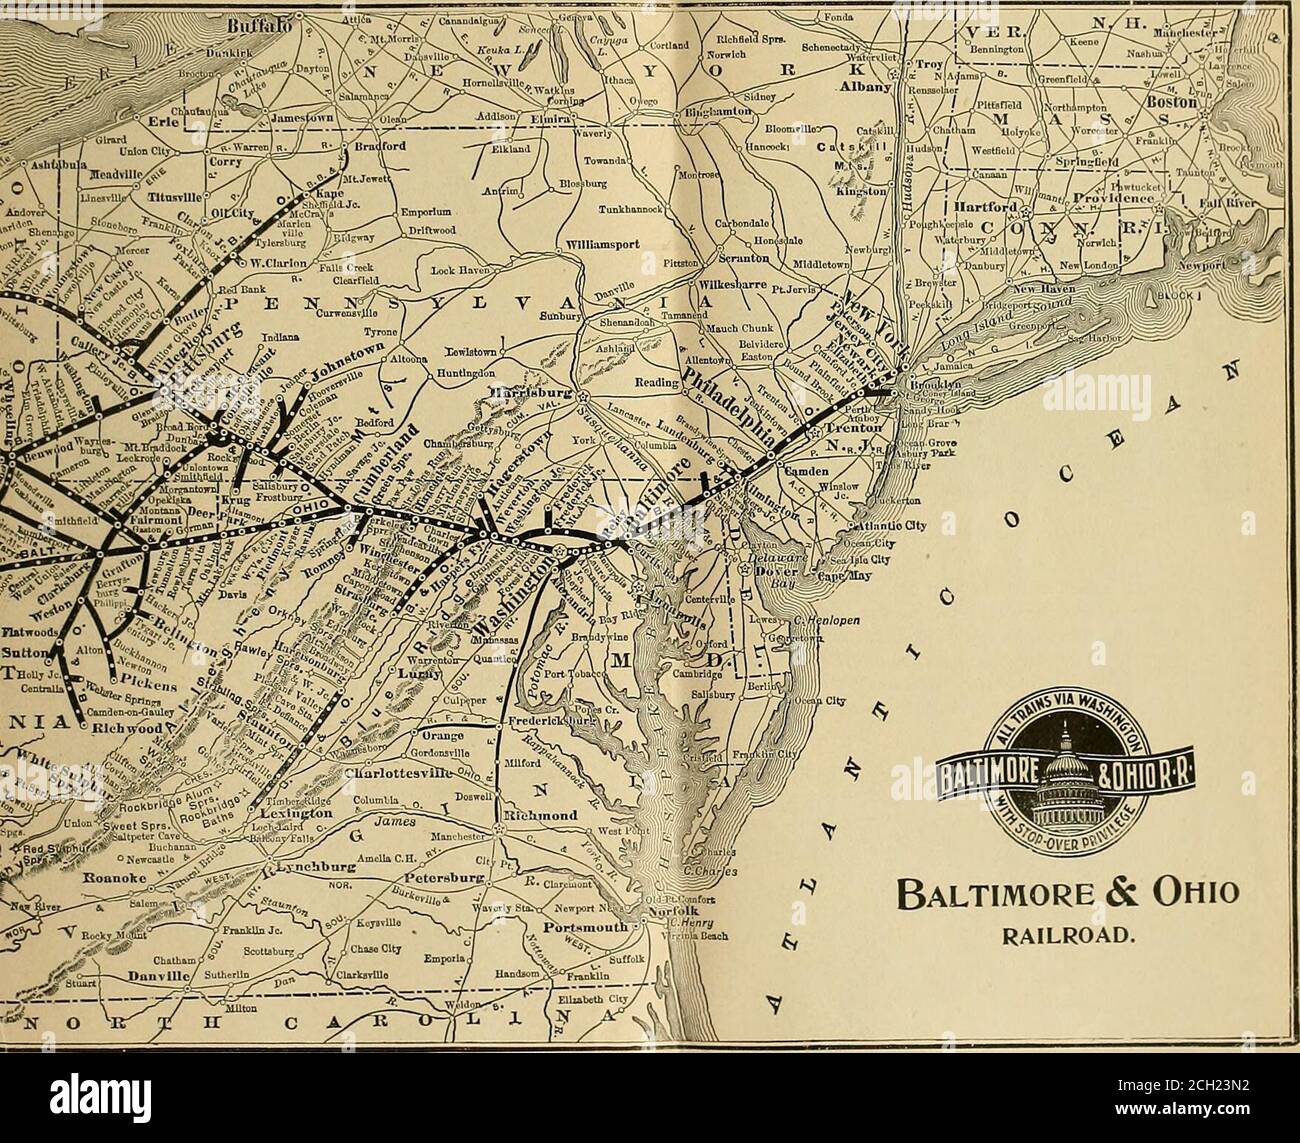 Baltimore & Ohio resorts and springs, summer 1905 . Lebiu ) Oceana g^ng  Klcss Mammotb Cave / GlaBgow Jc. Bowling Green ja^ .^ ; aiemplila Jo. ^aI*^  / -P^Cumberland FallsT -Wllliamabiir^^